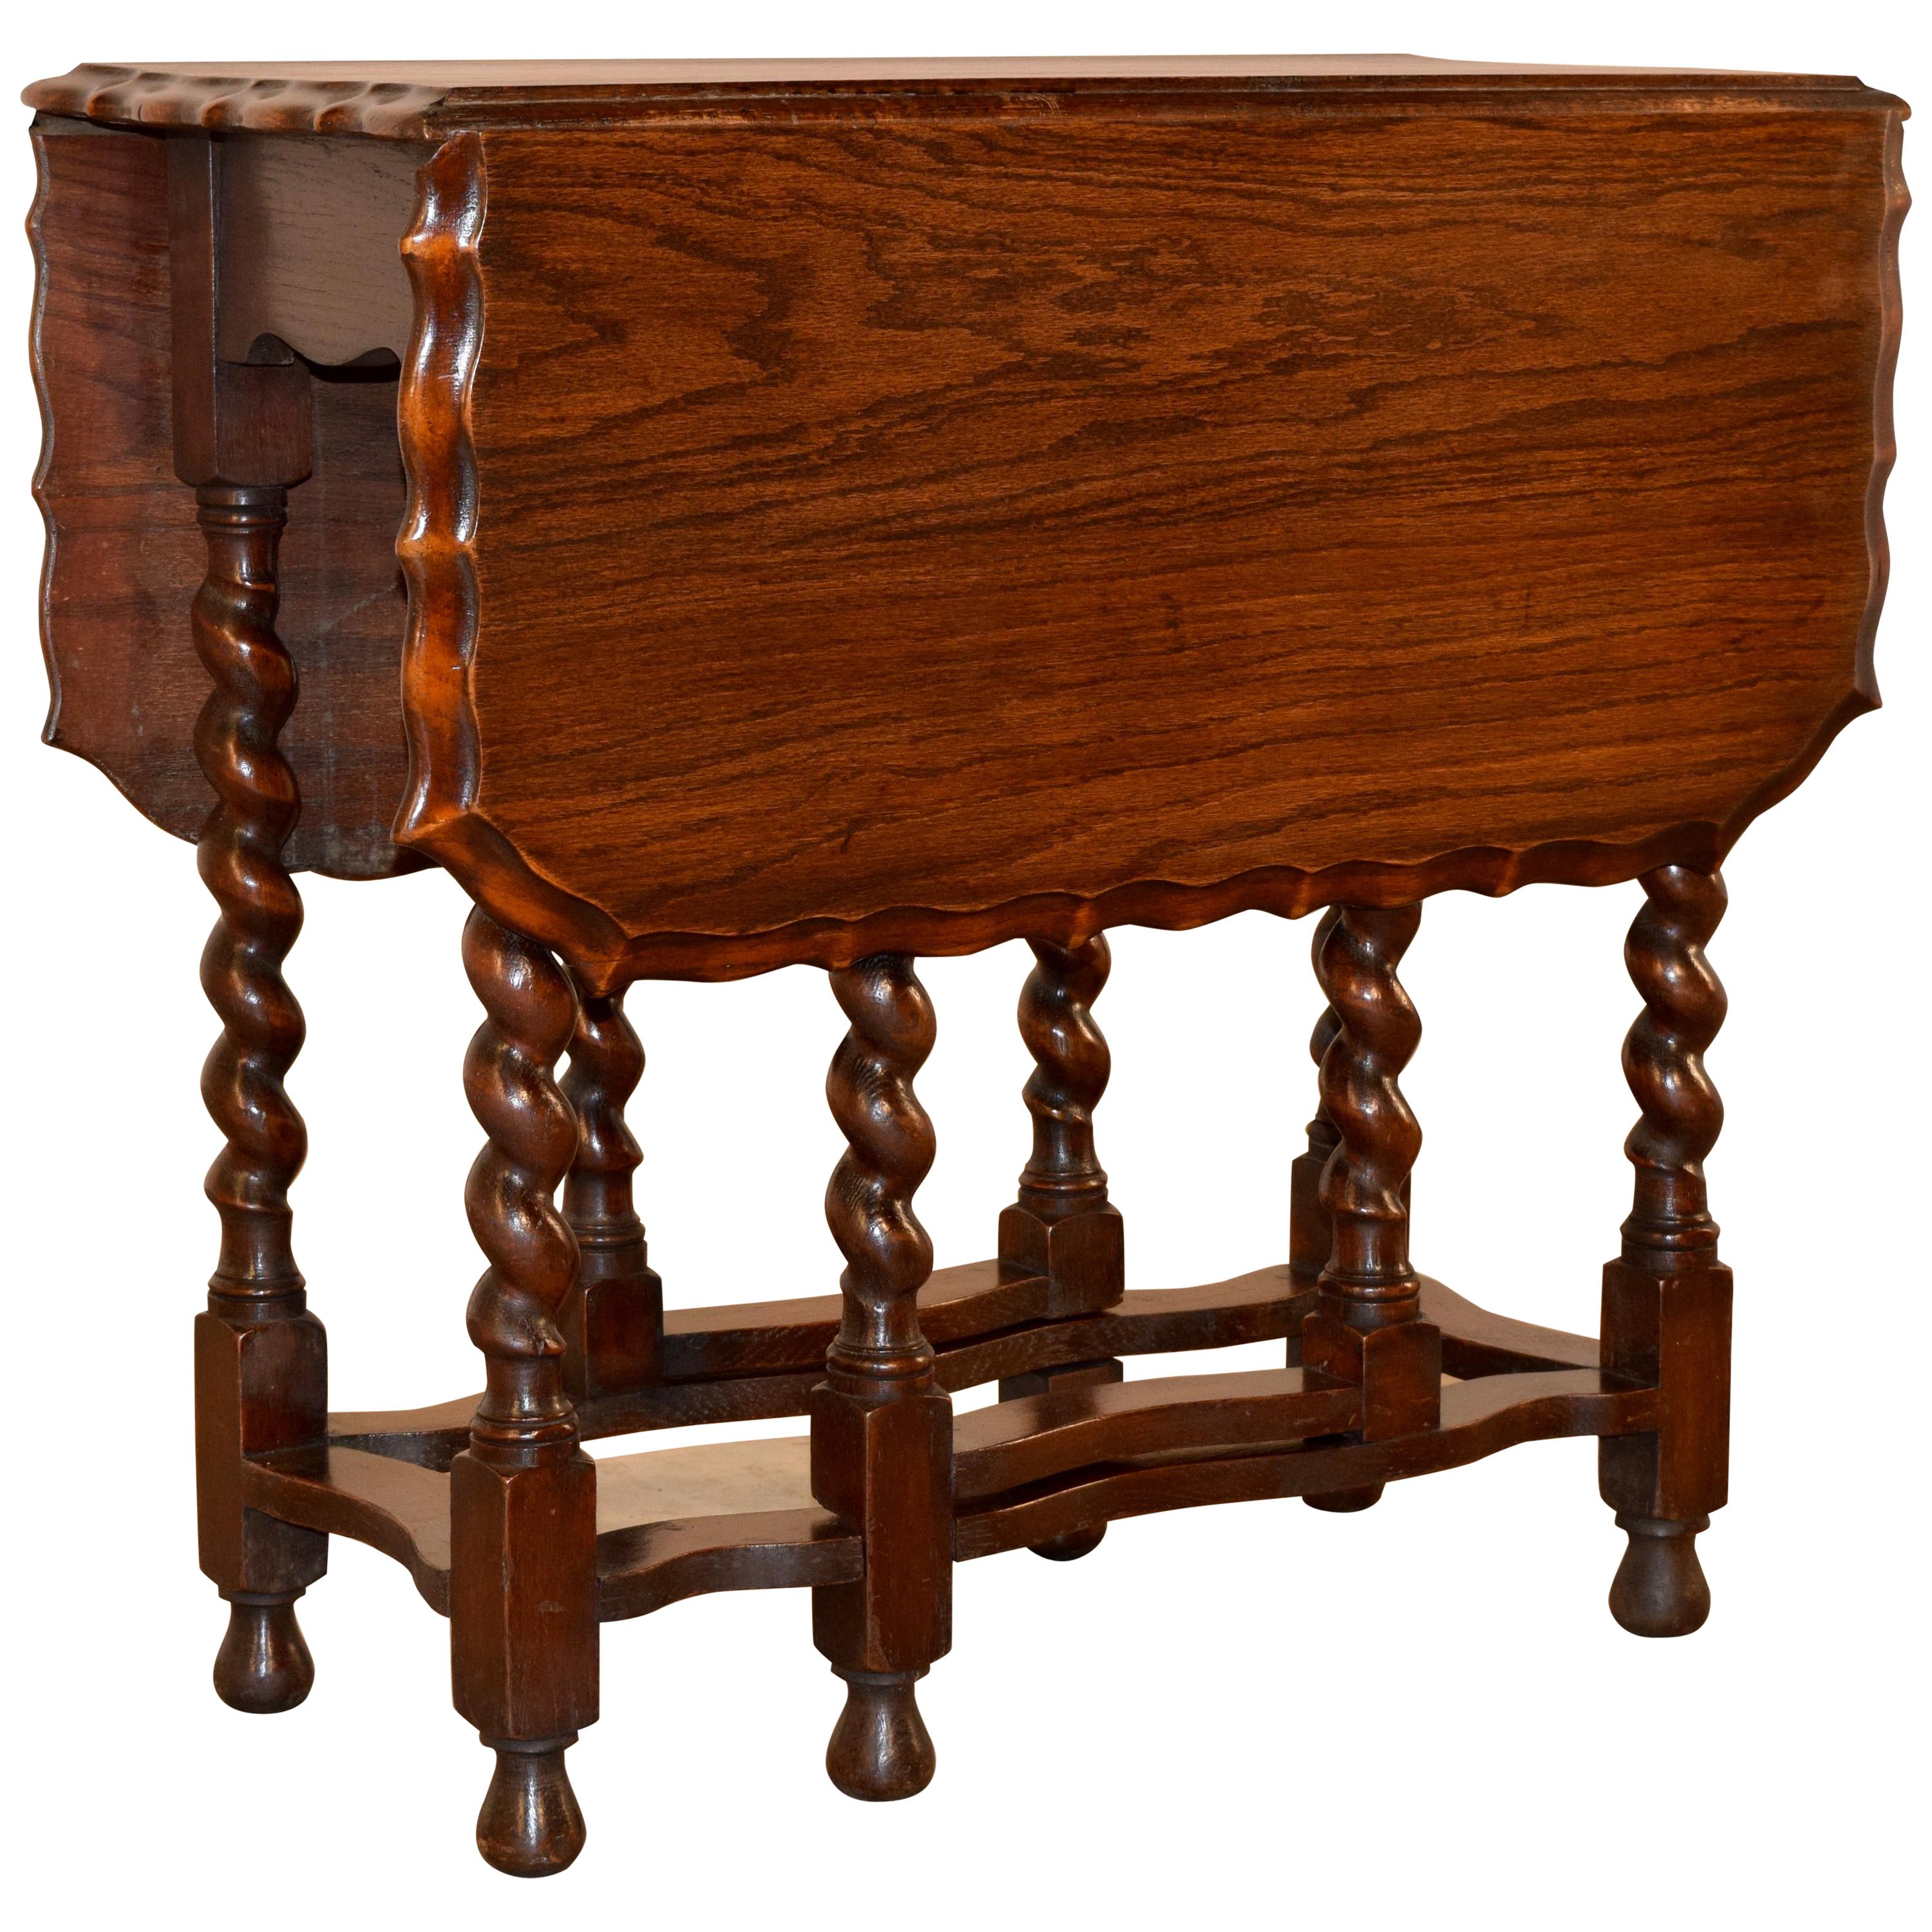 Late 19th Century Oak Gate-Leg Table